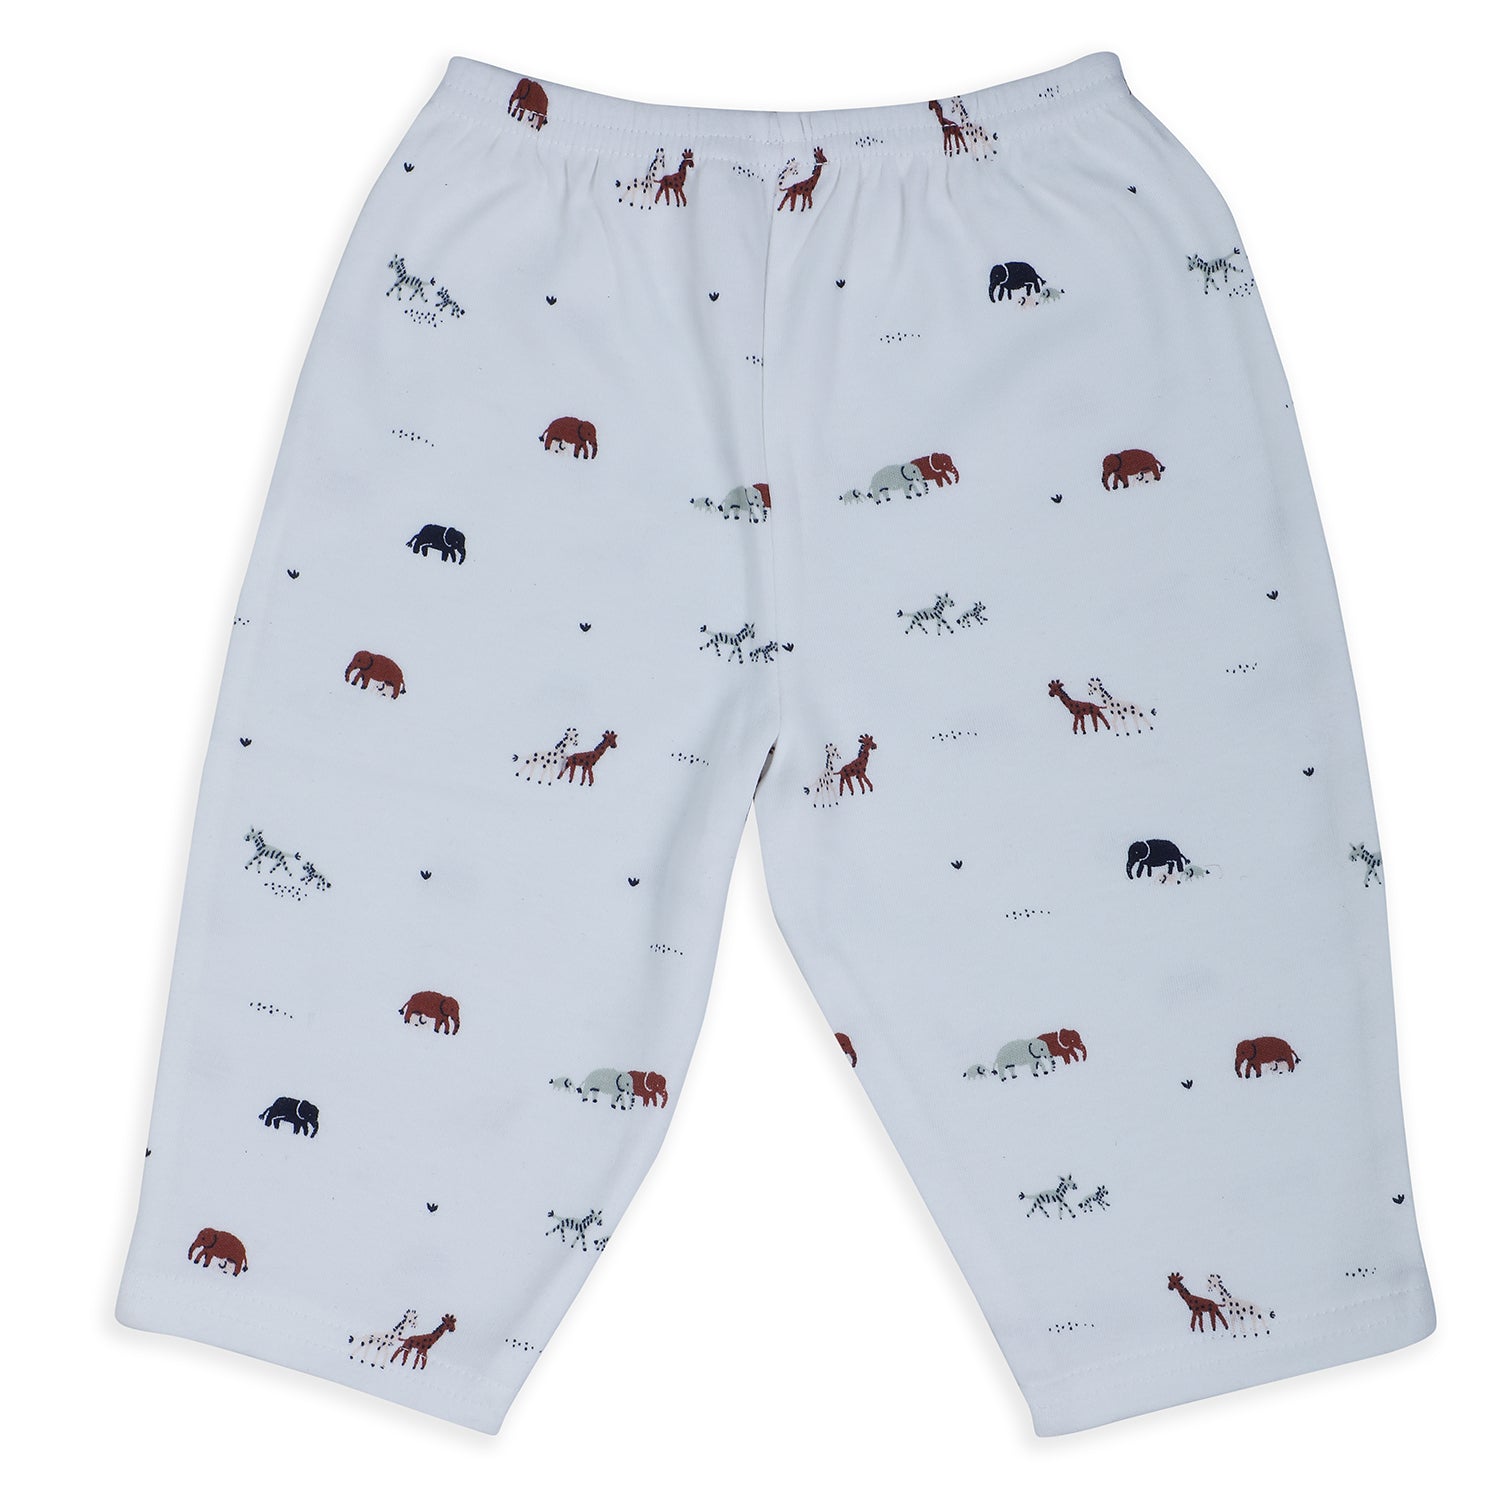 Baby Moo Animal Sleepy Time Cotton Full Sleeves Top And Pyjama 2pcs Night Suit - White - Baby Moo